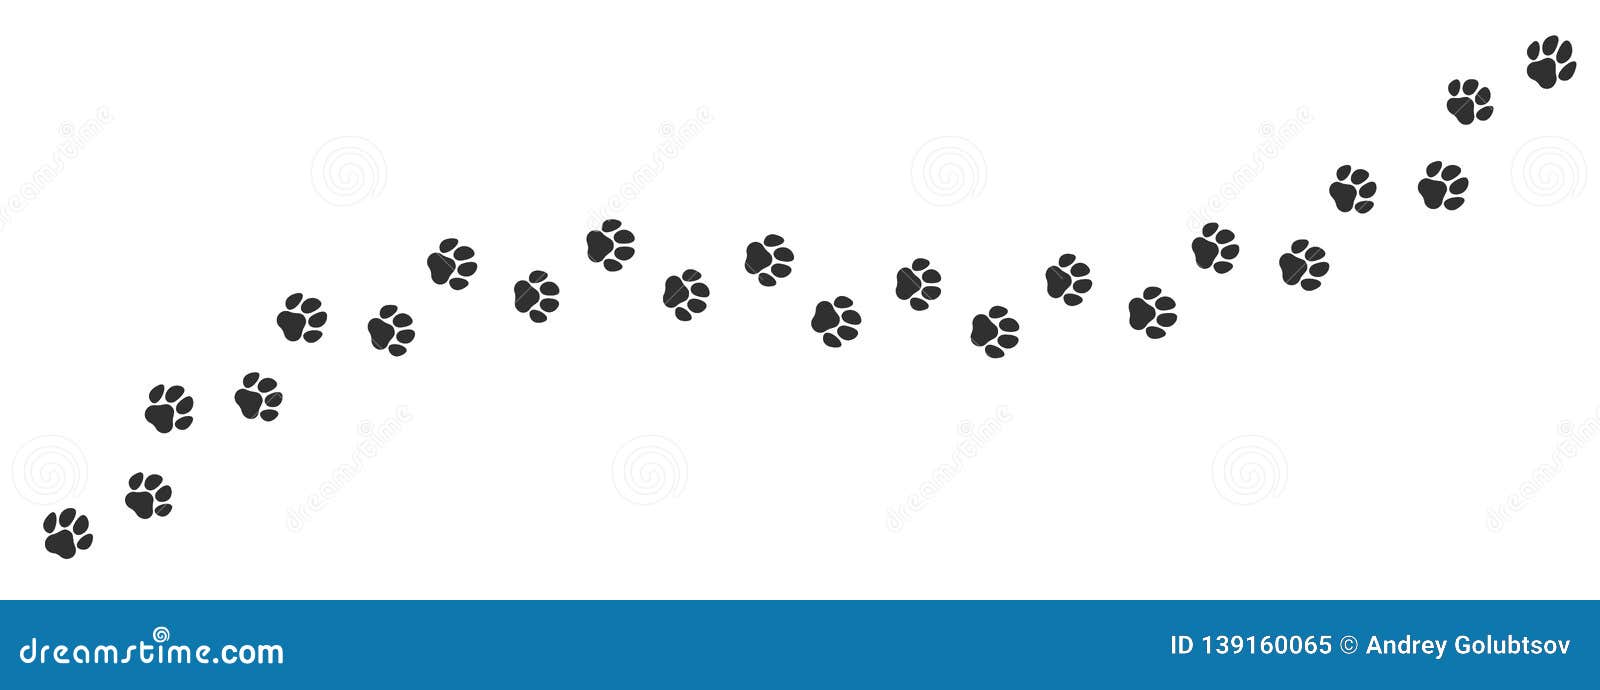 paw print trail on white background.  cat or dog, pawprint walk line path pattern